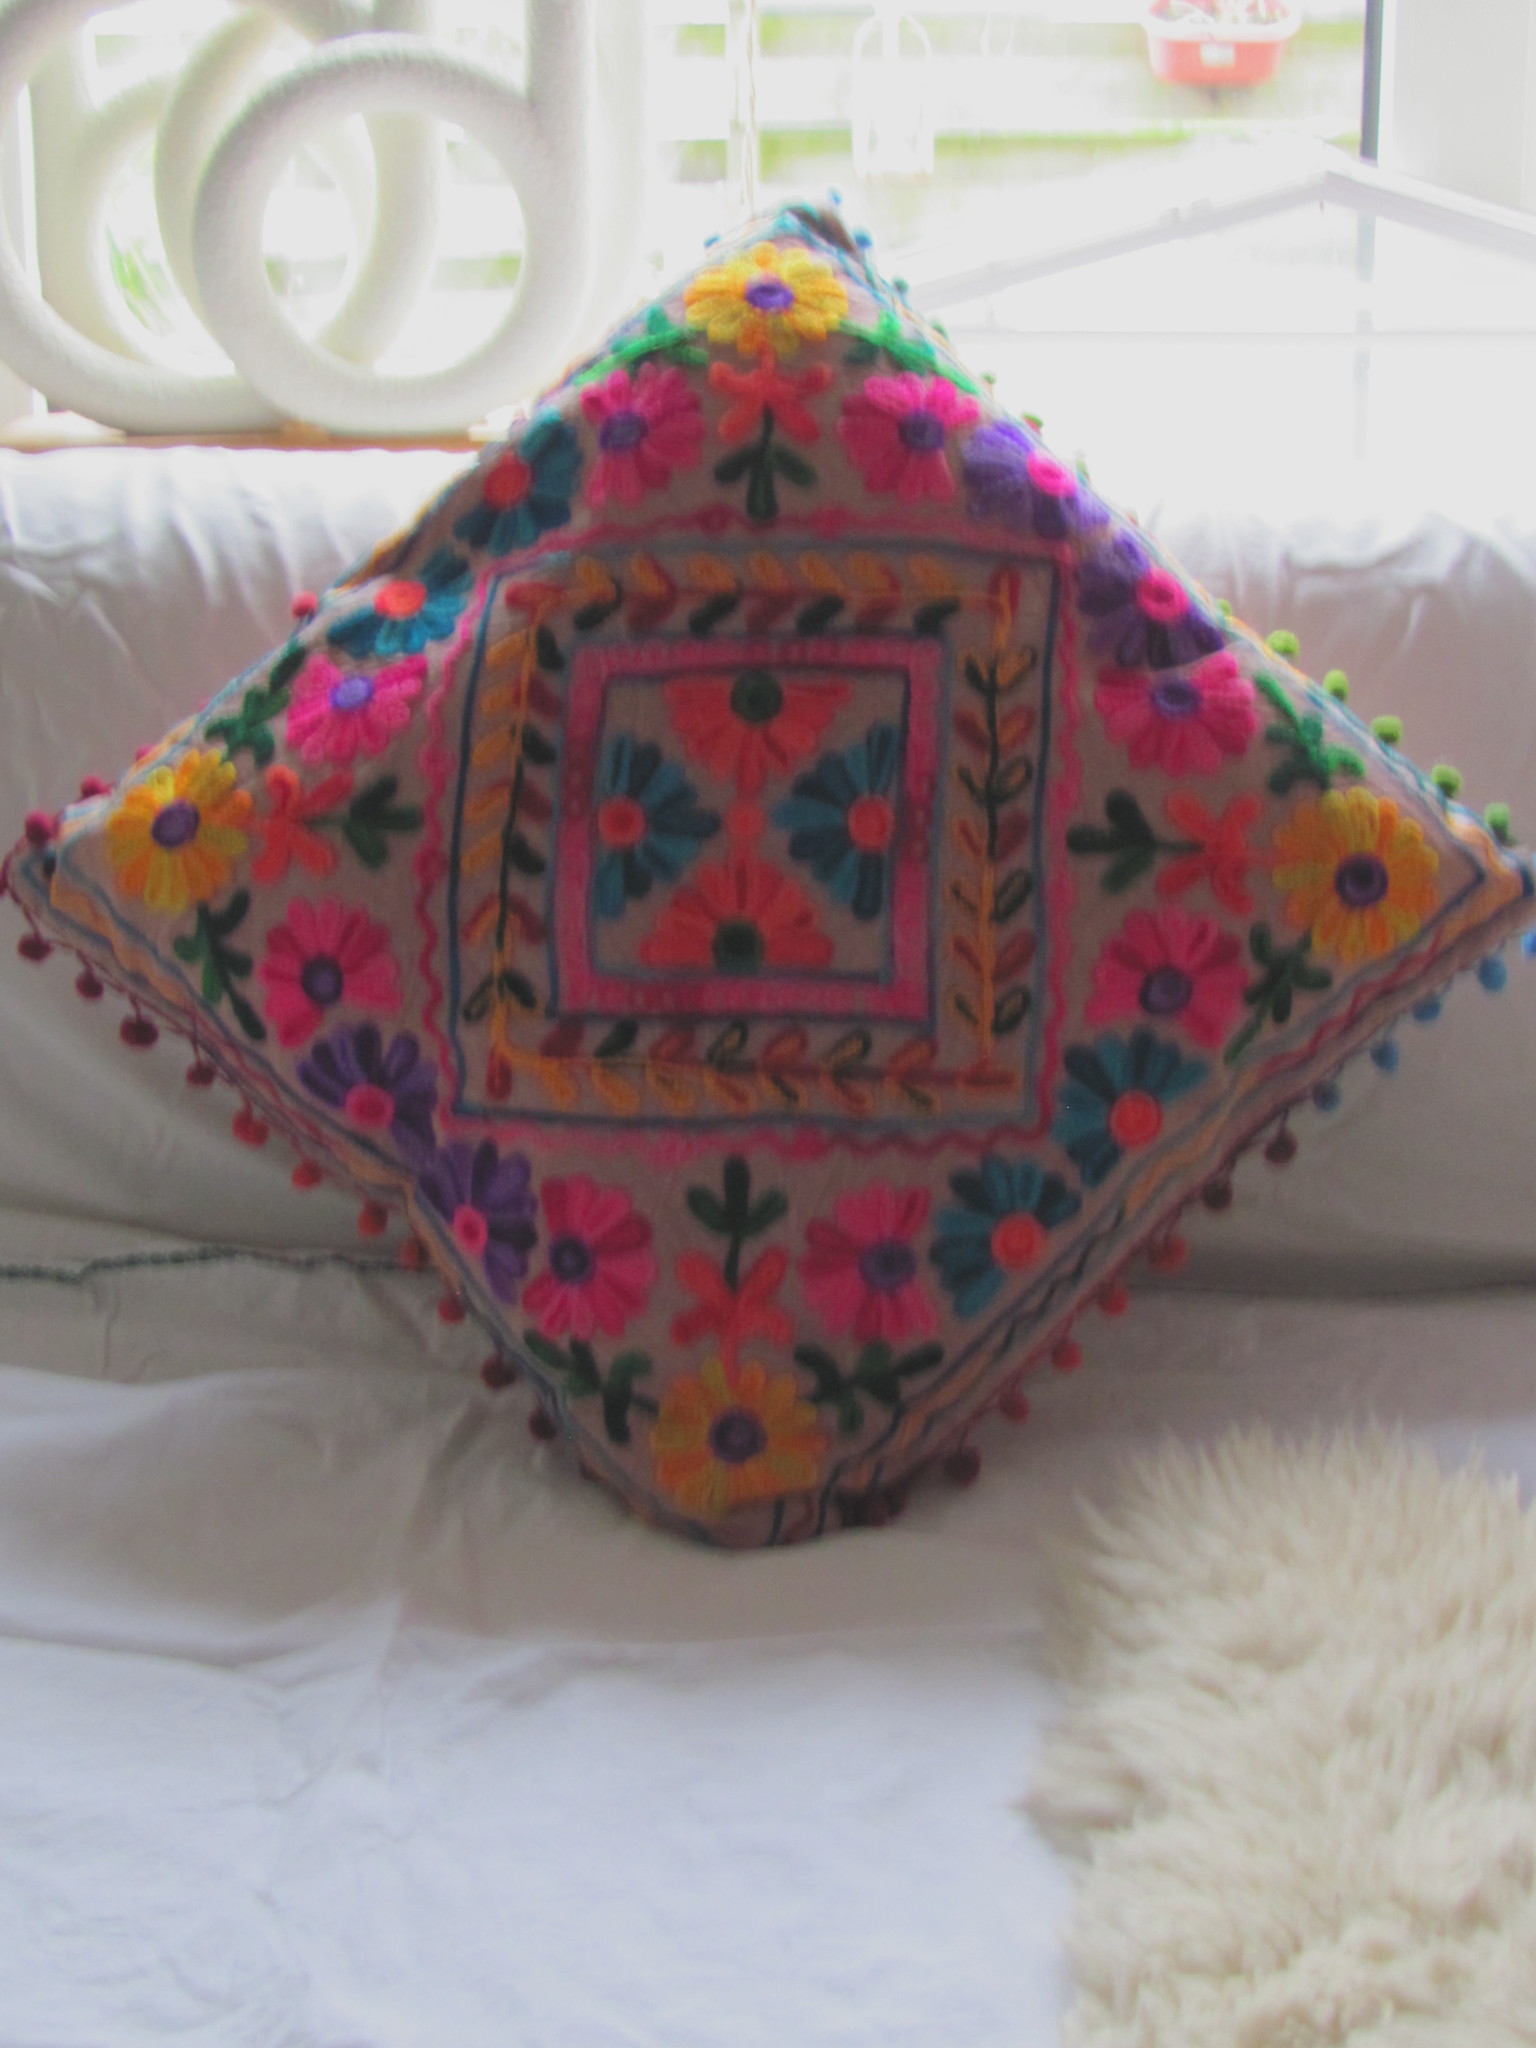 cushion cover susani embroiderd in Uzbeki style